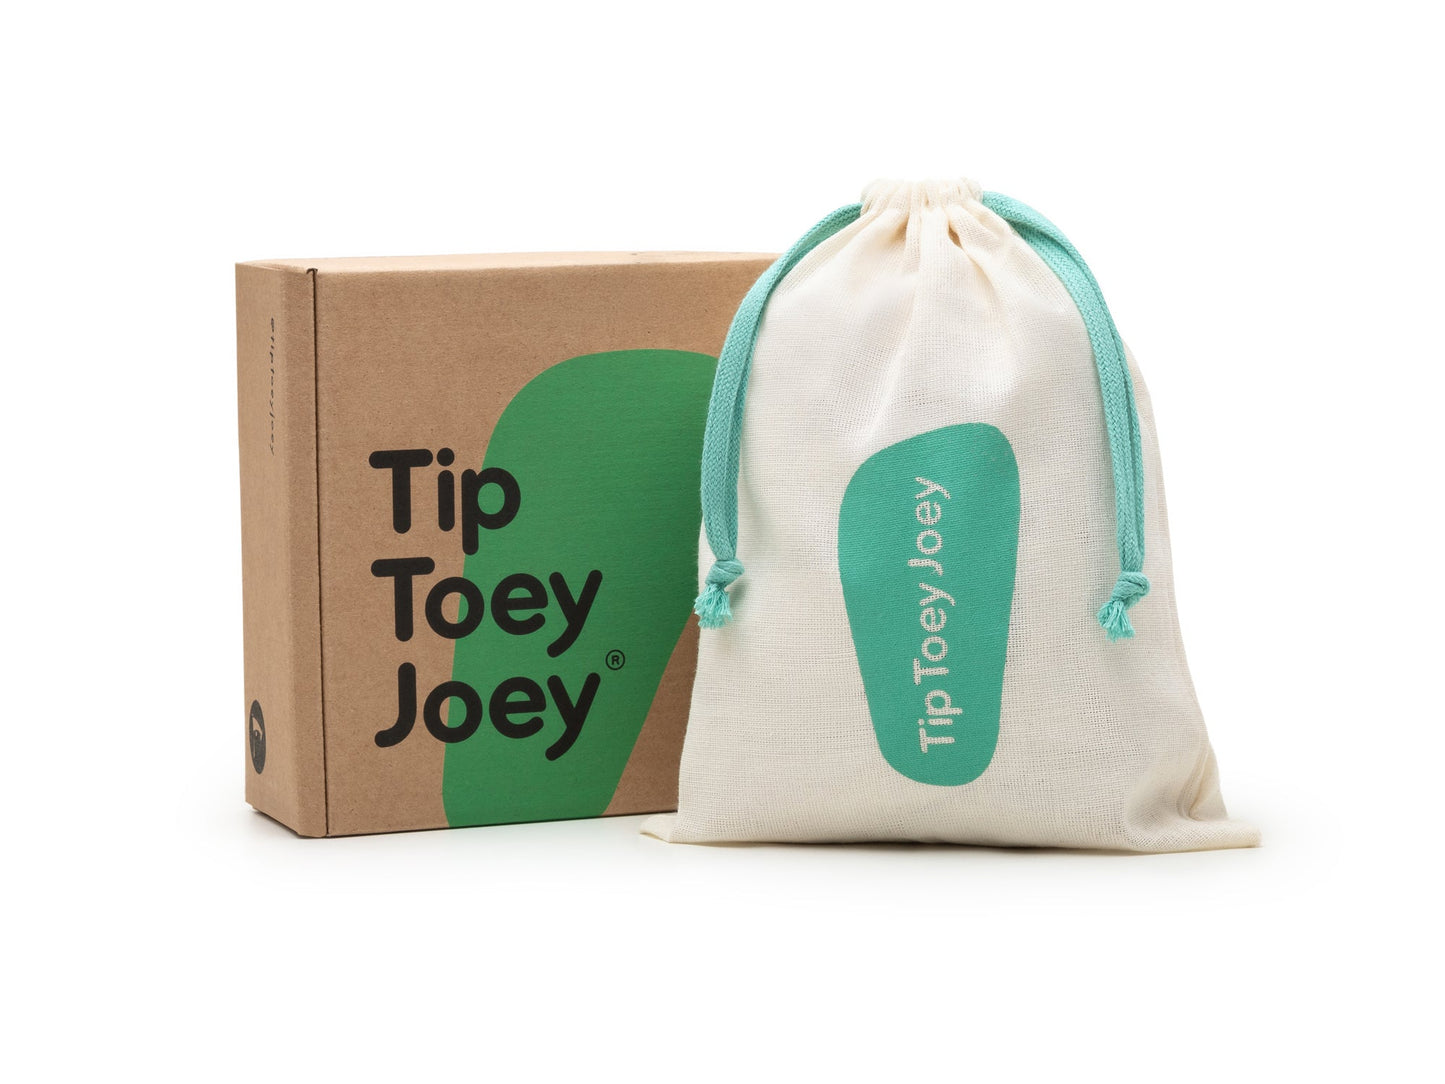 Tip Toey Joey - Sandálias Parky Cotton Candy